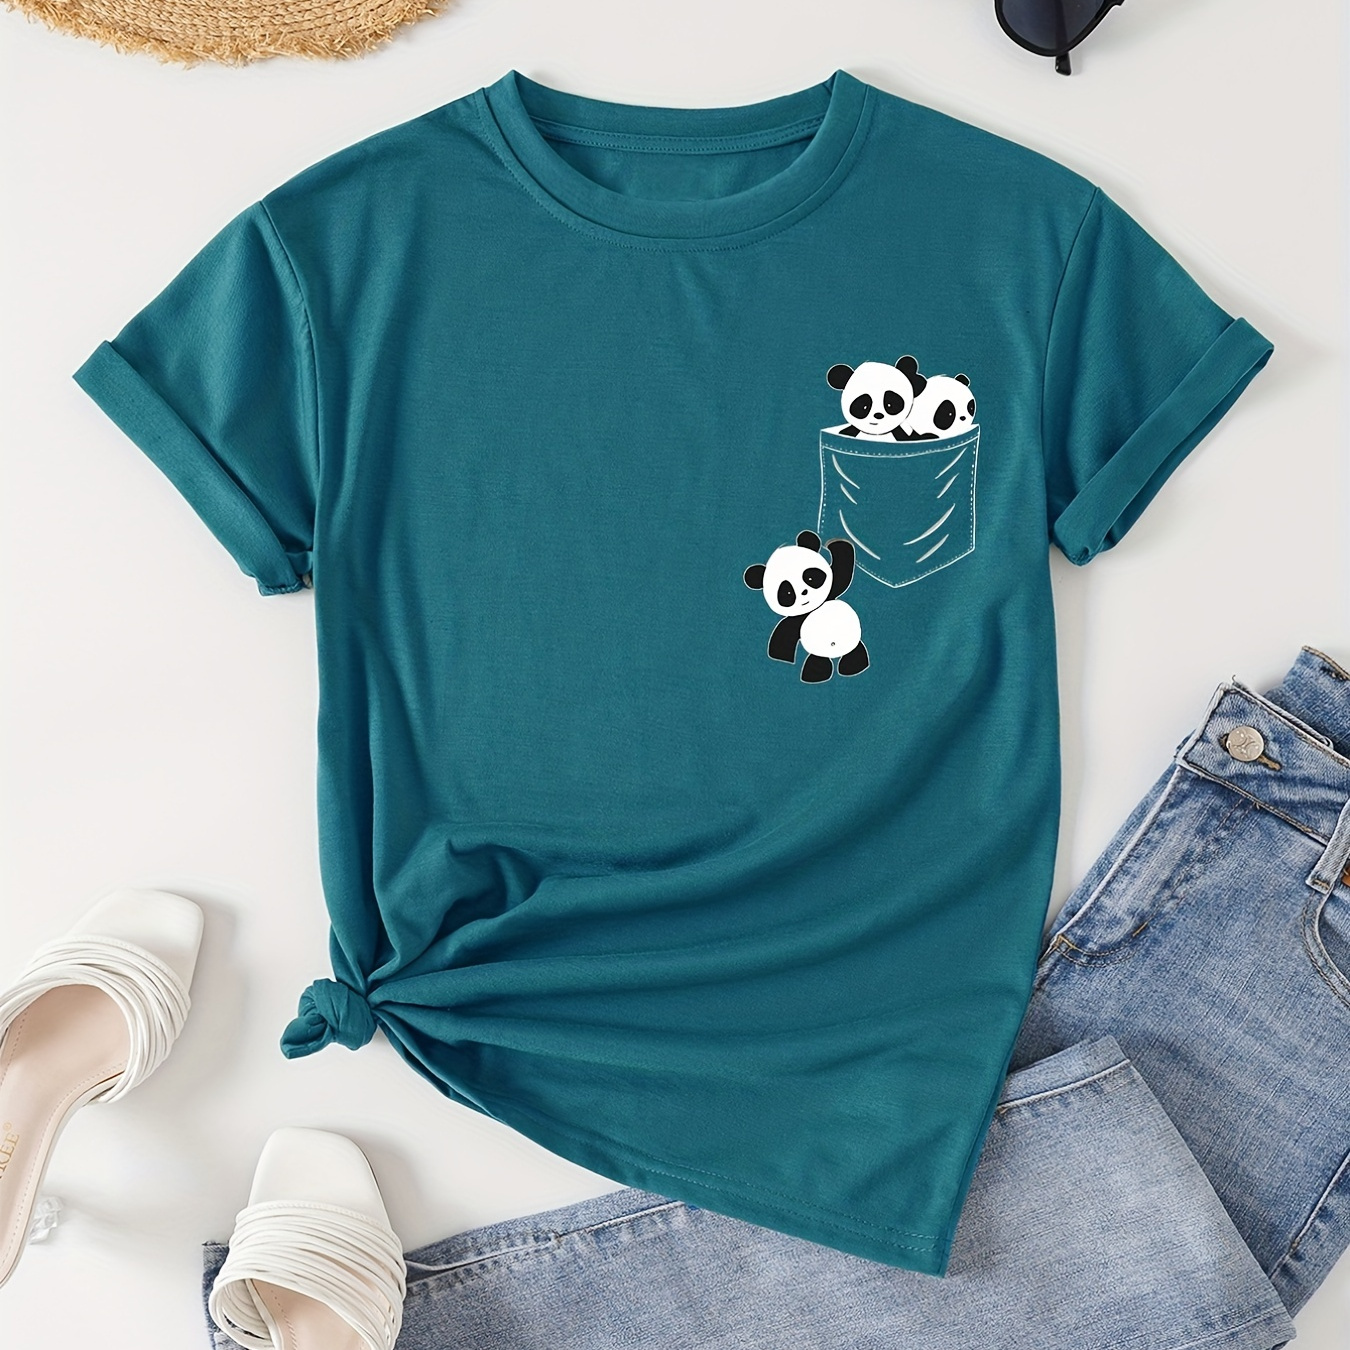 

Panda Print Crew Neck T-shirt, Casual Short Sleeve T-shirt For Spring & Summer, Women's Clothing